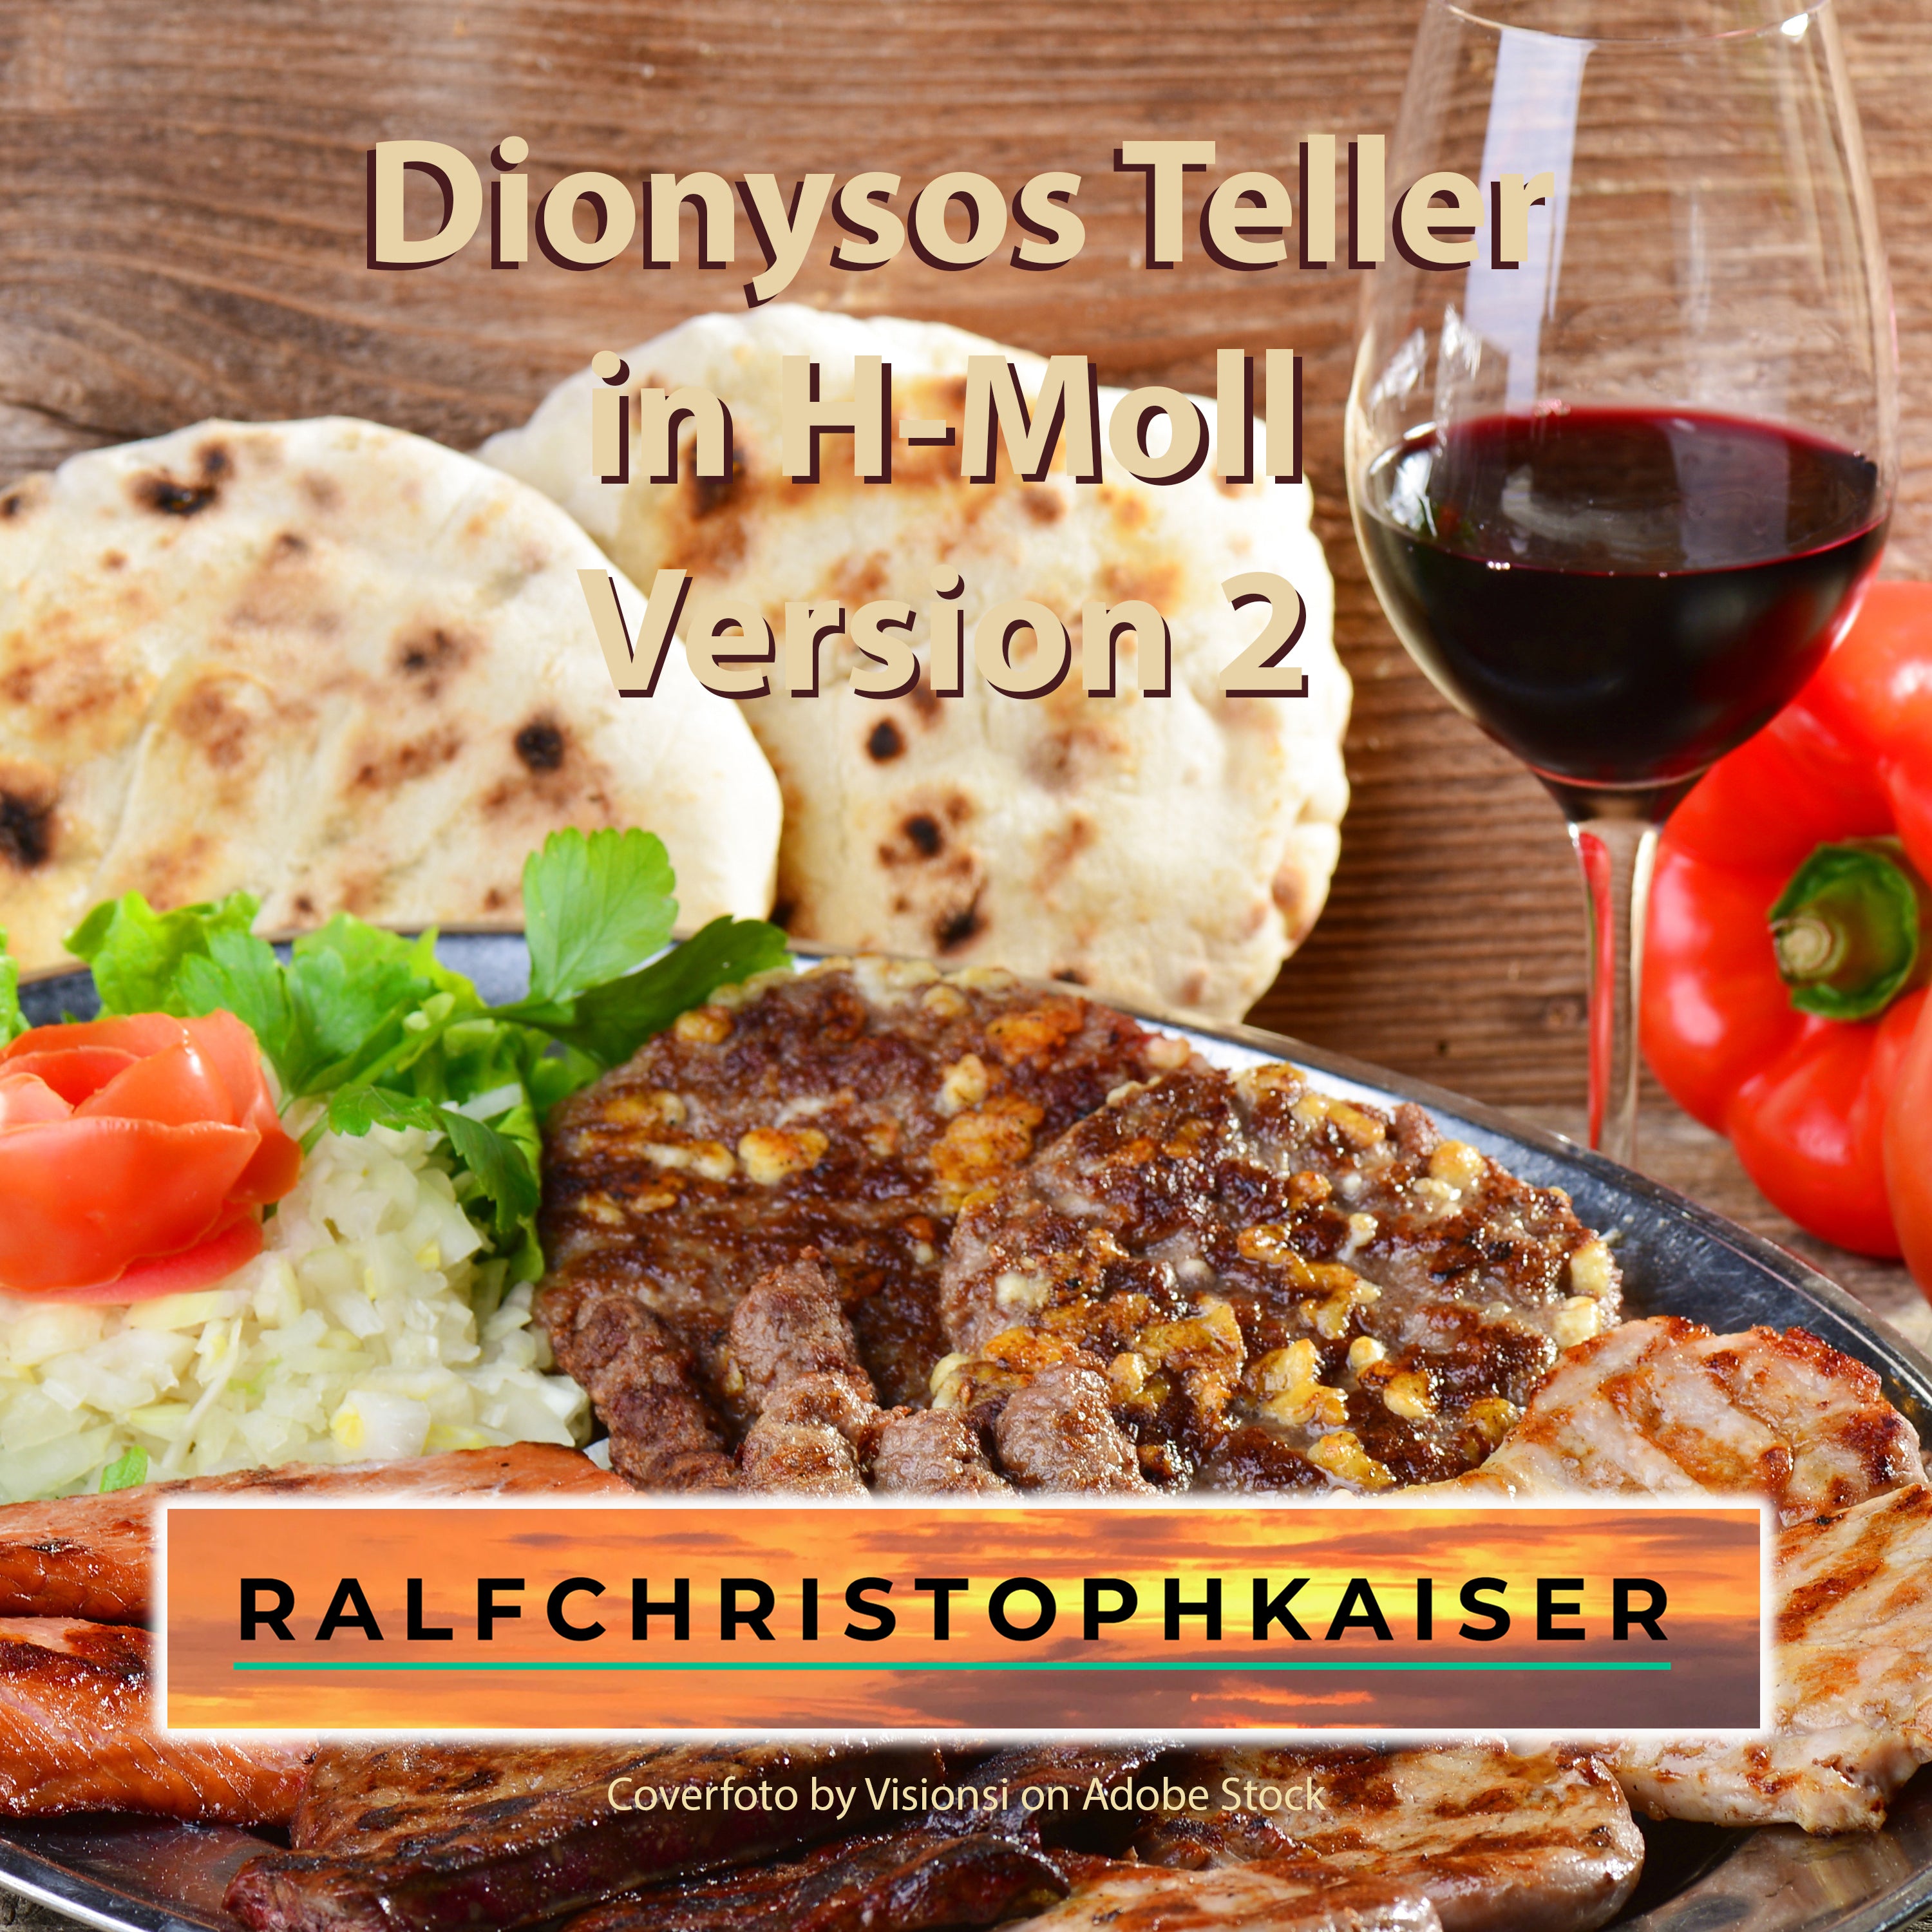 Dionysoss Teller in H-Moll Version 2 by Ralf Christoph Kaiser Full Score Full Orchestra Leadsheet and Parts - ralfchristophkaiser.com Musik und Noten